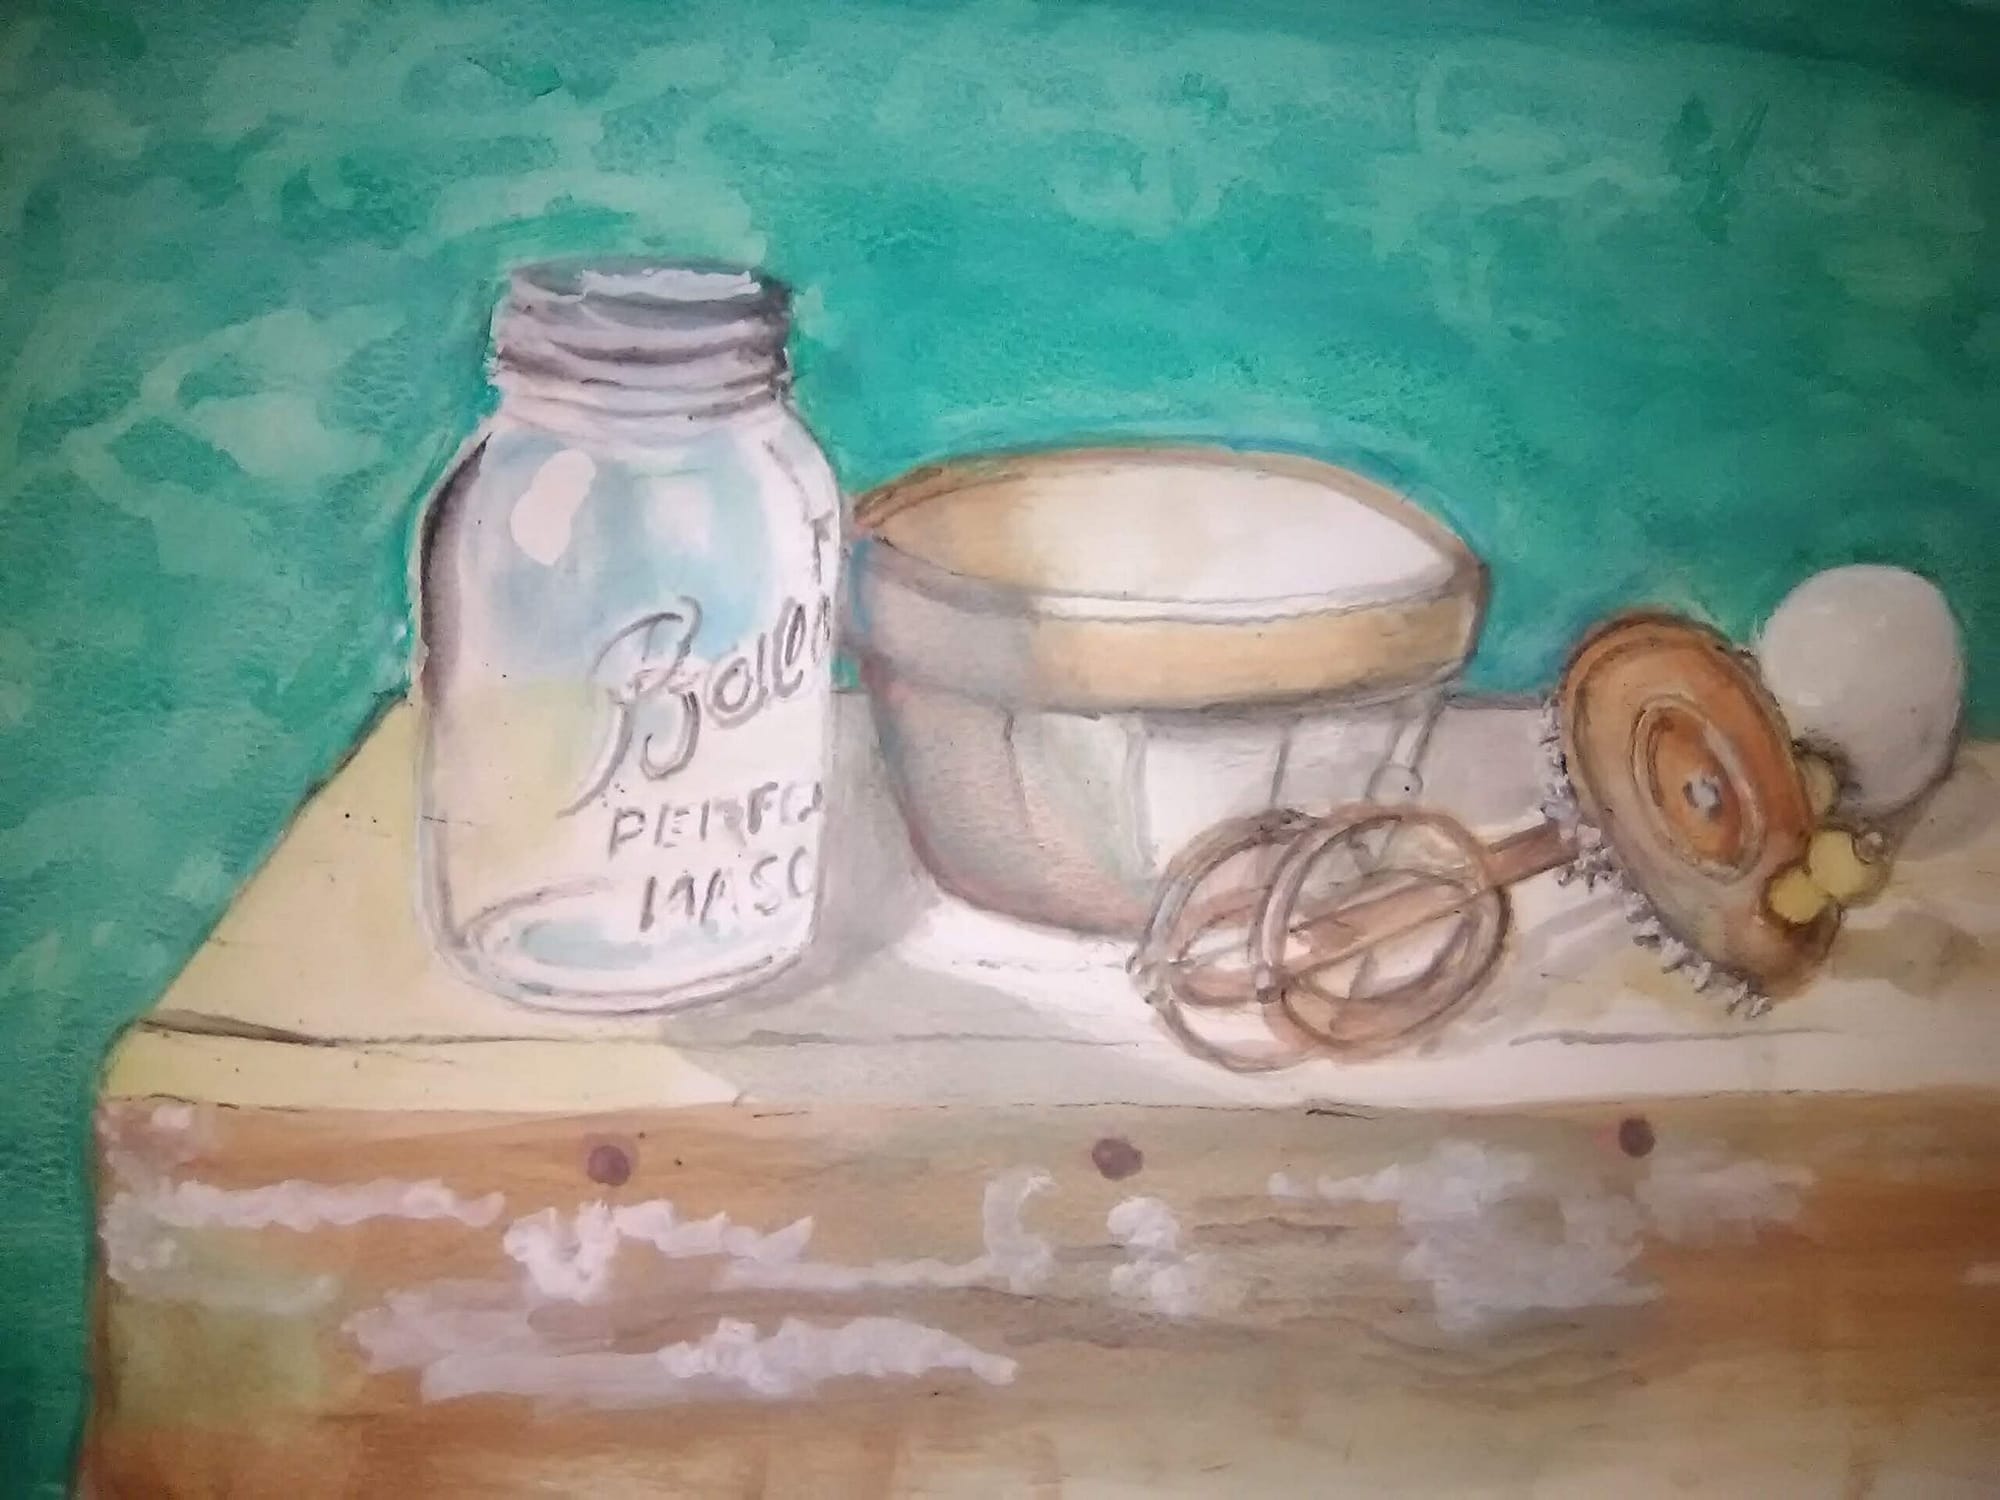 watercolor exercise #13 - ball jar, bowl, mixer, and egg